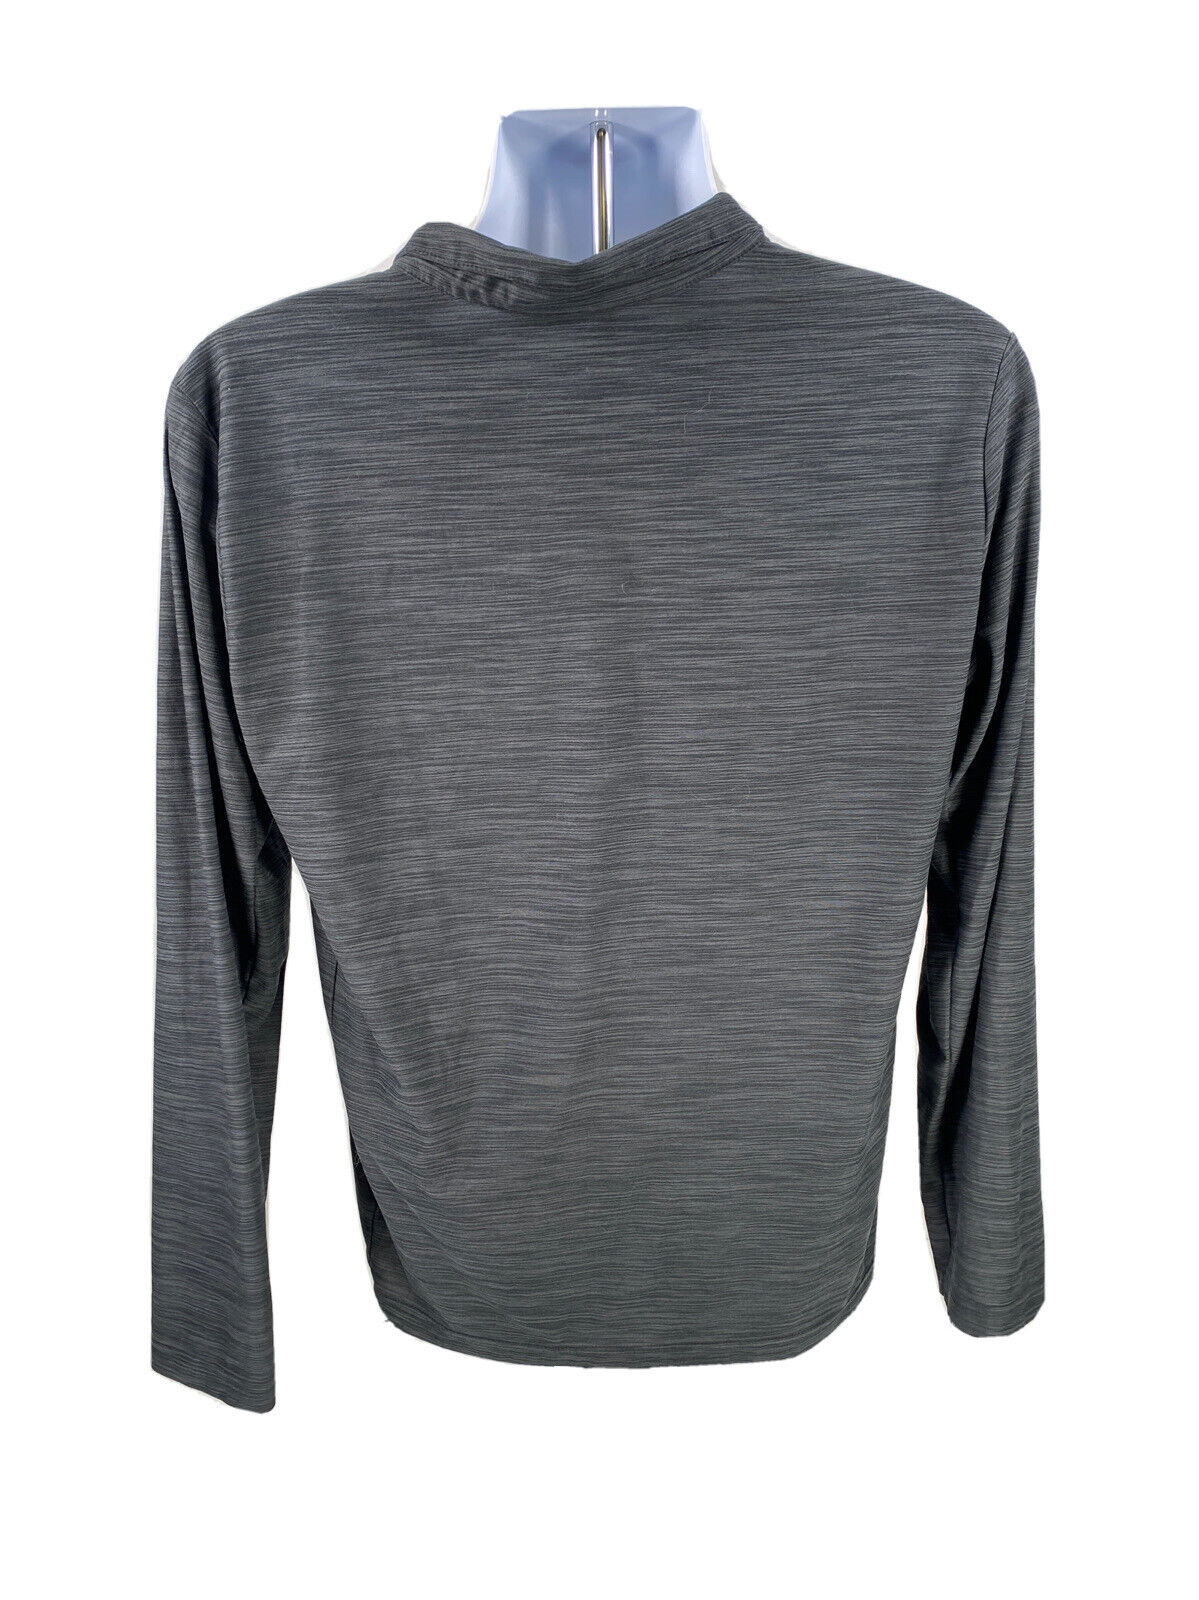 Nike Men's Gray Long Sleeve Dry Breathe 1/3 Zip Athletic Shirt Sz M